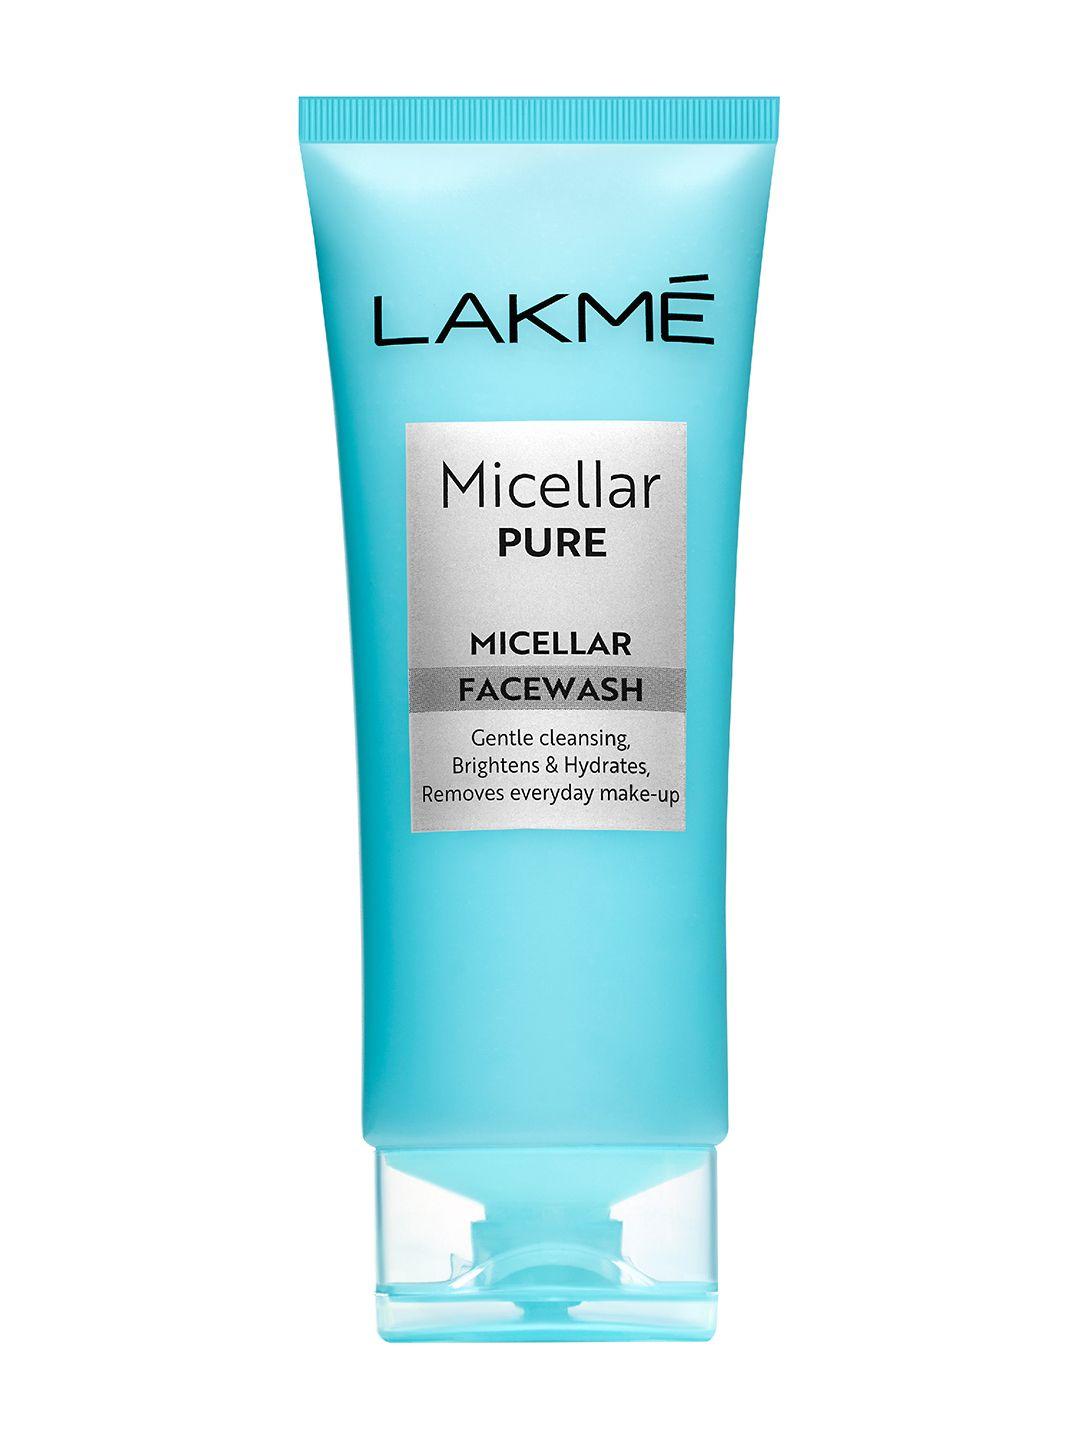 lakme micellar pure facewash for deep pore cleansing & hydration - 100g